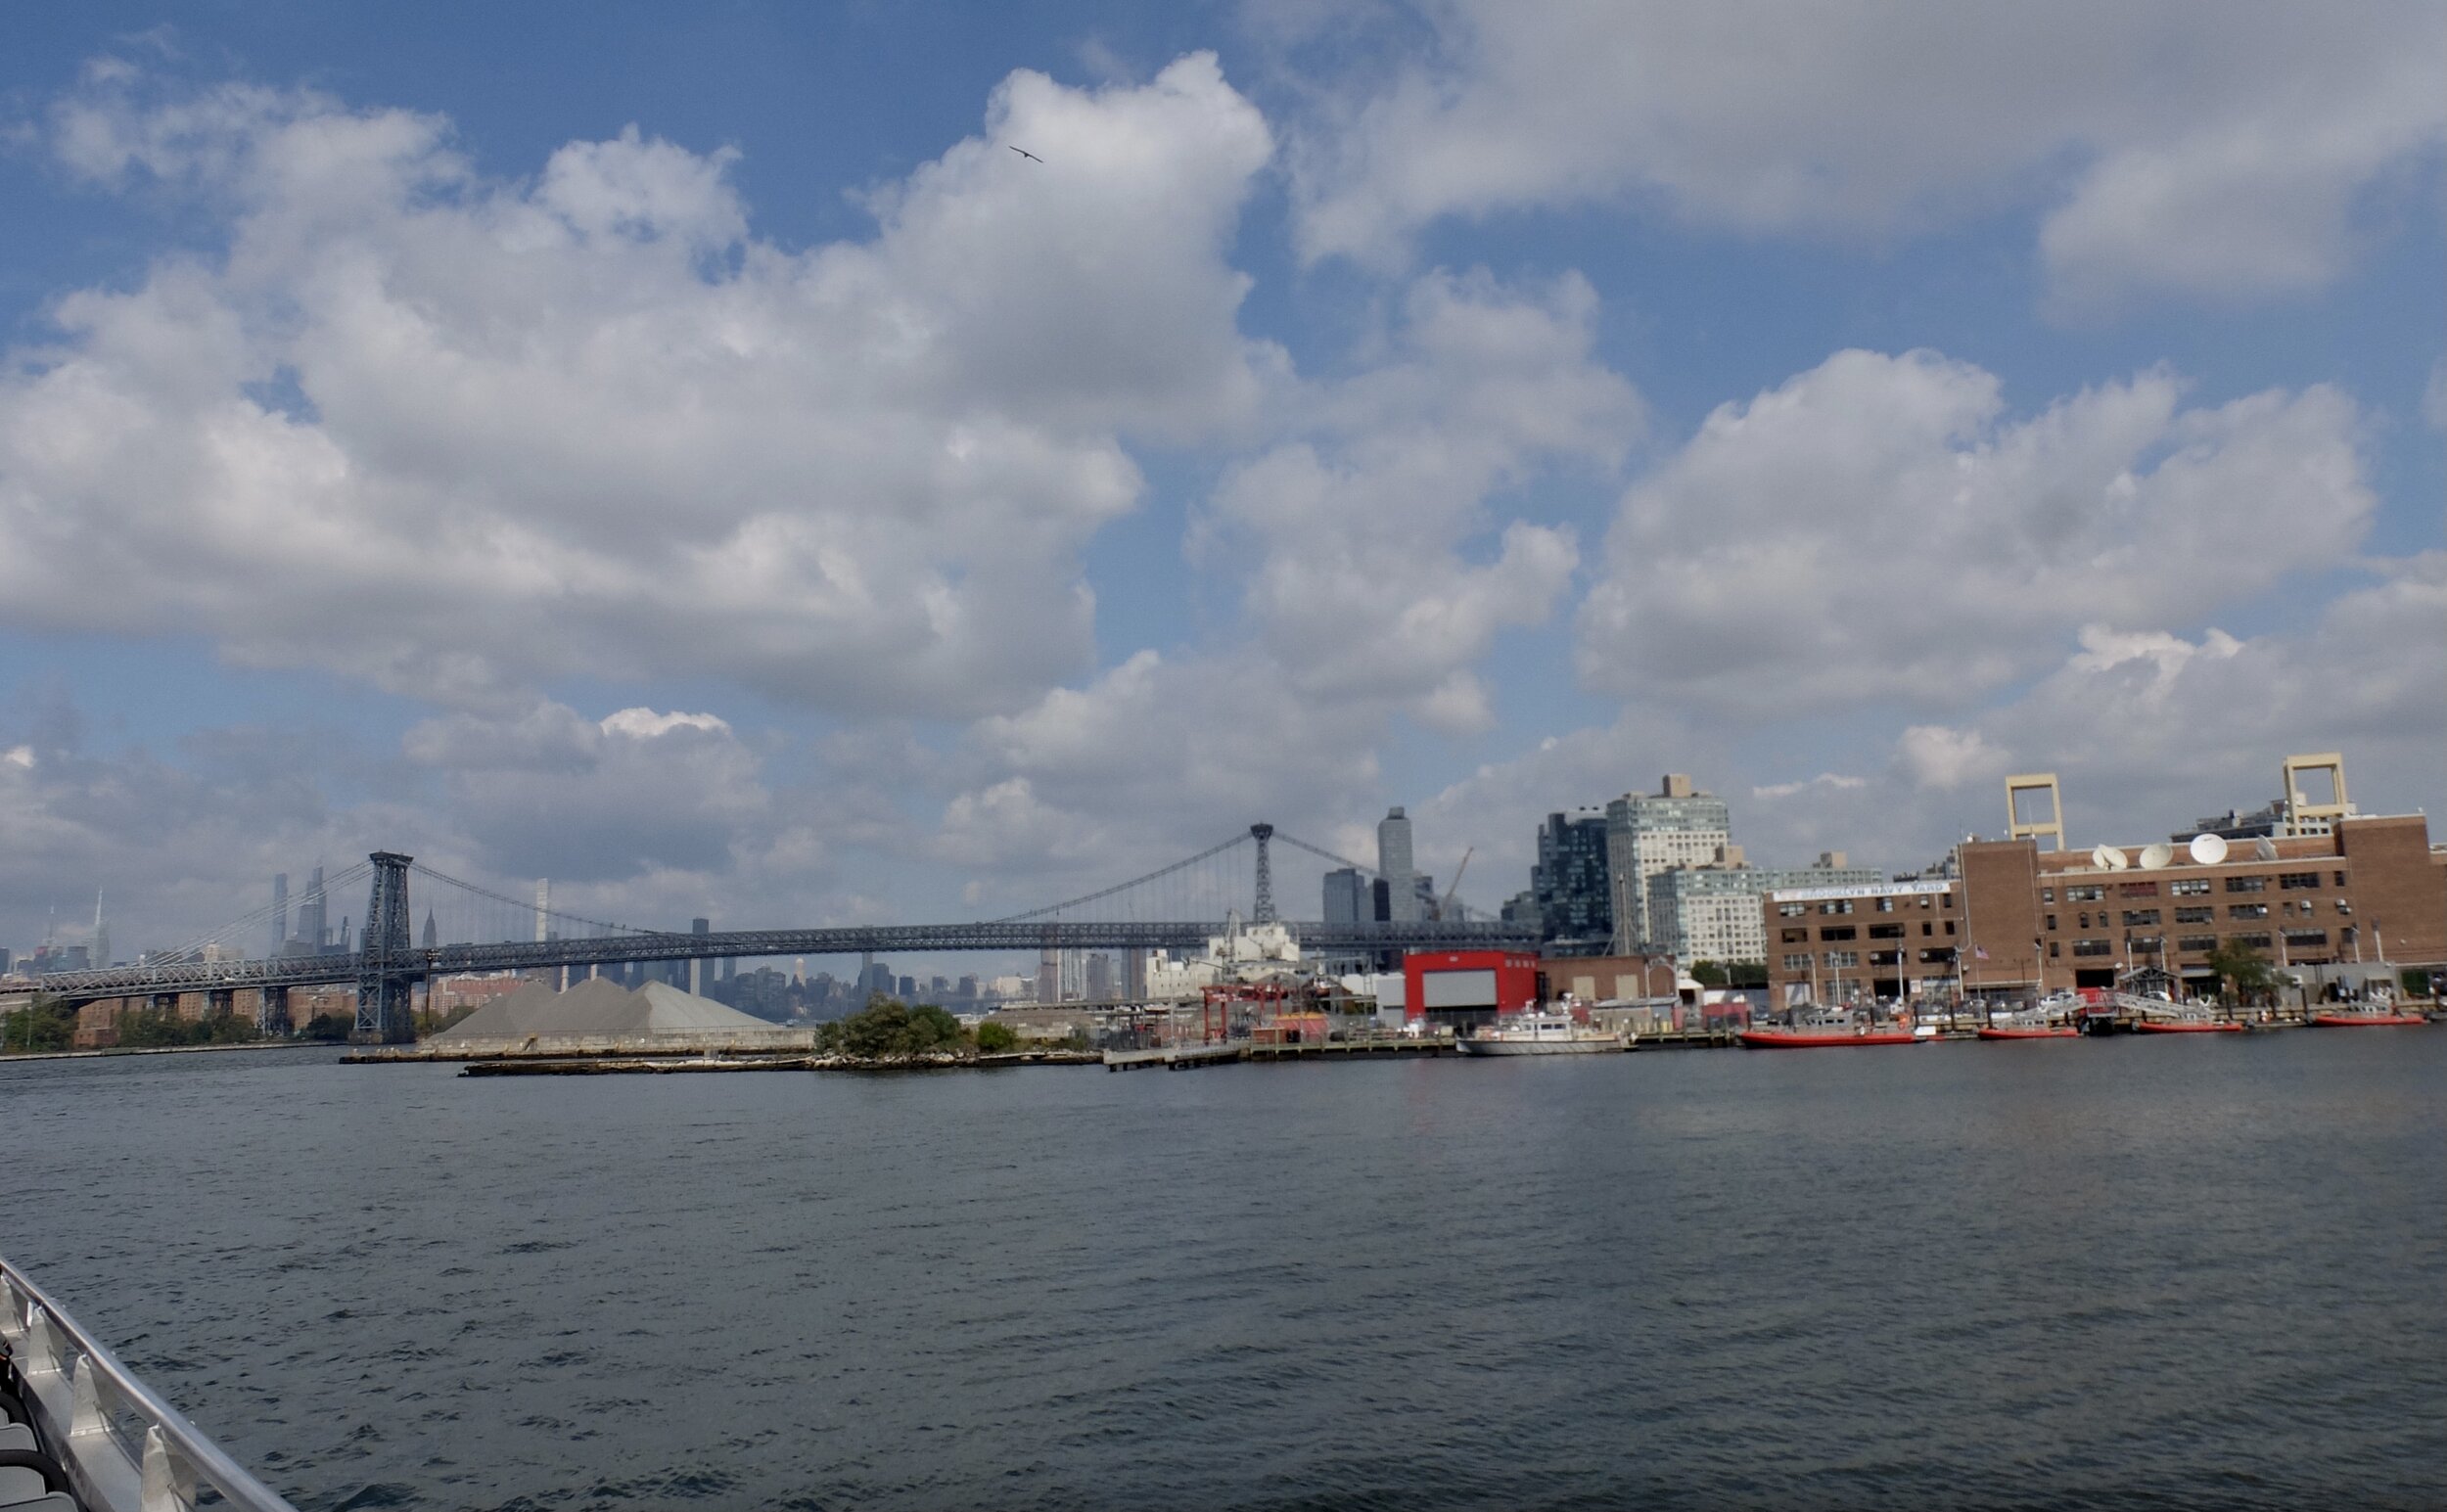 Leaving B'klyn Navy Yard &amp; entering the East River.